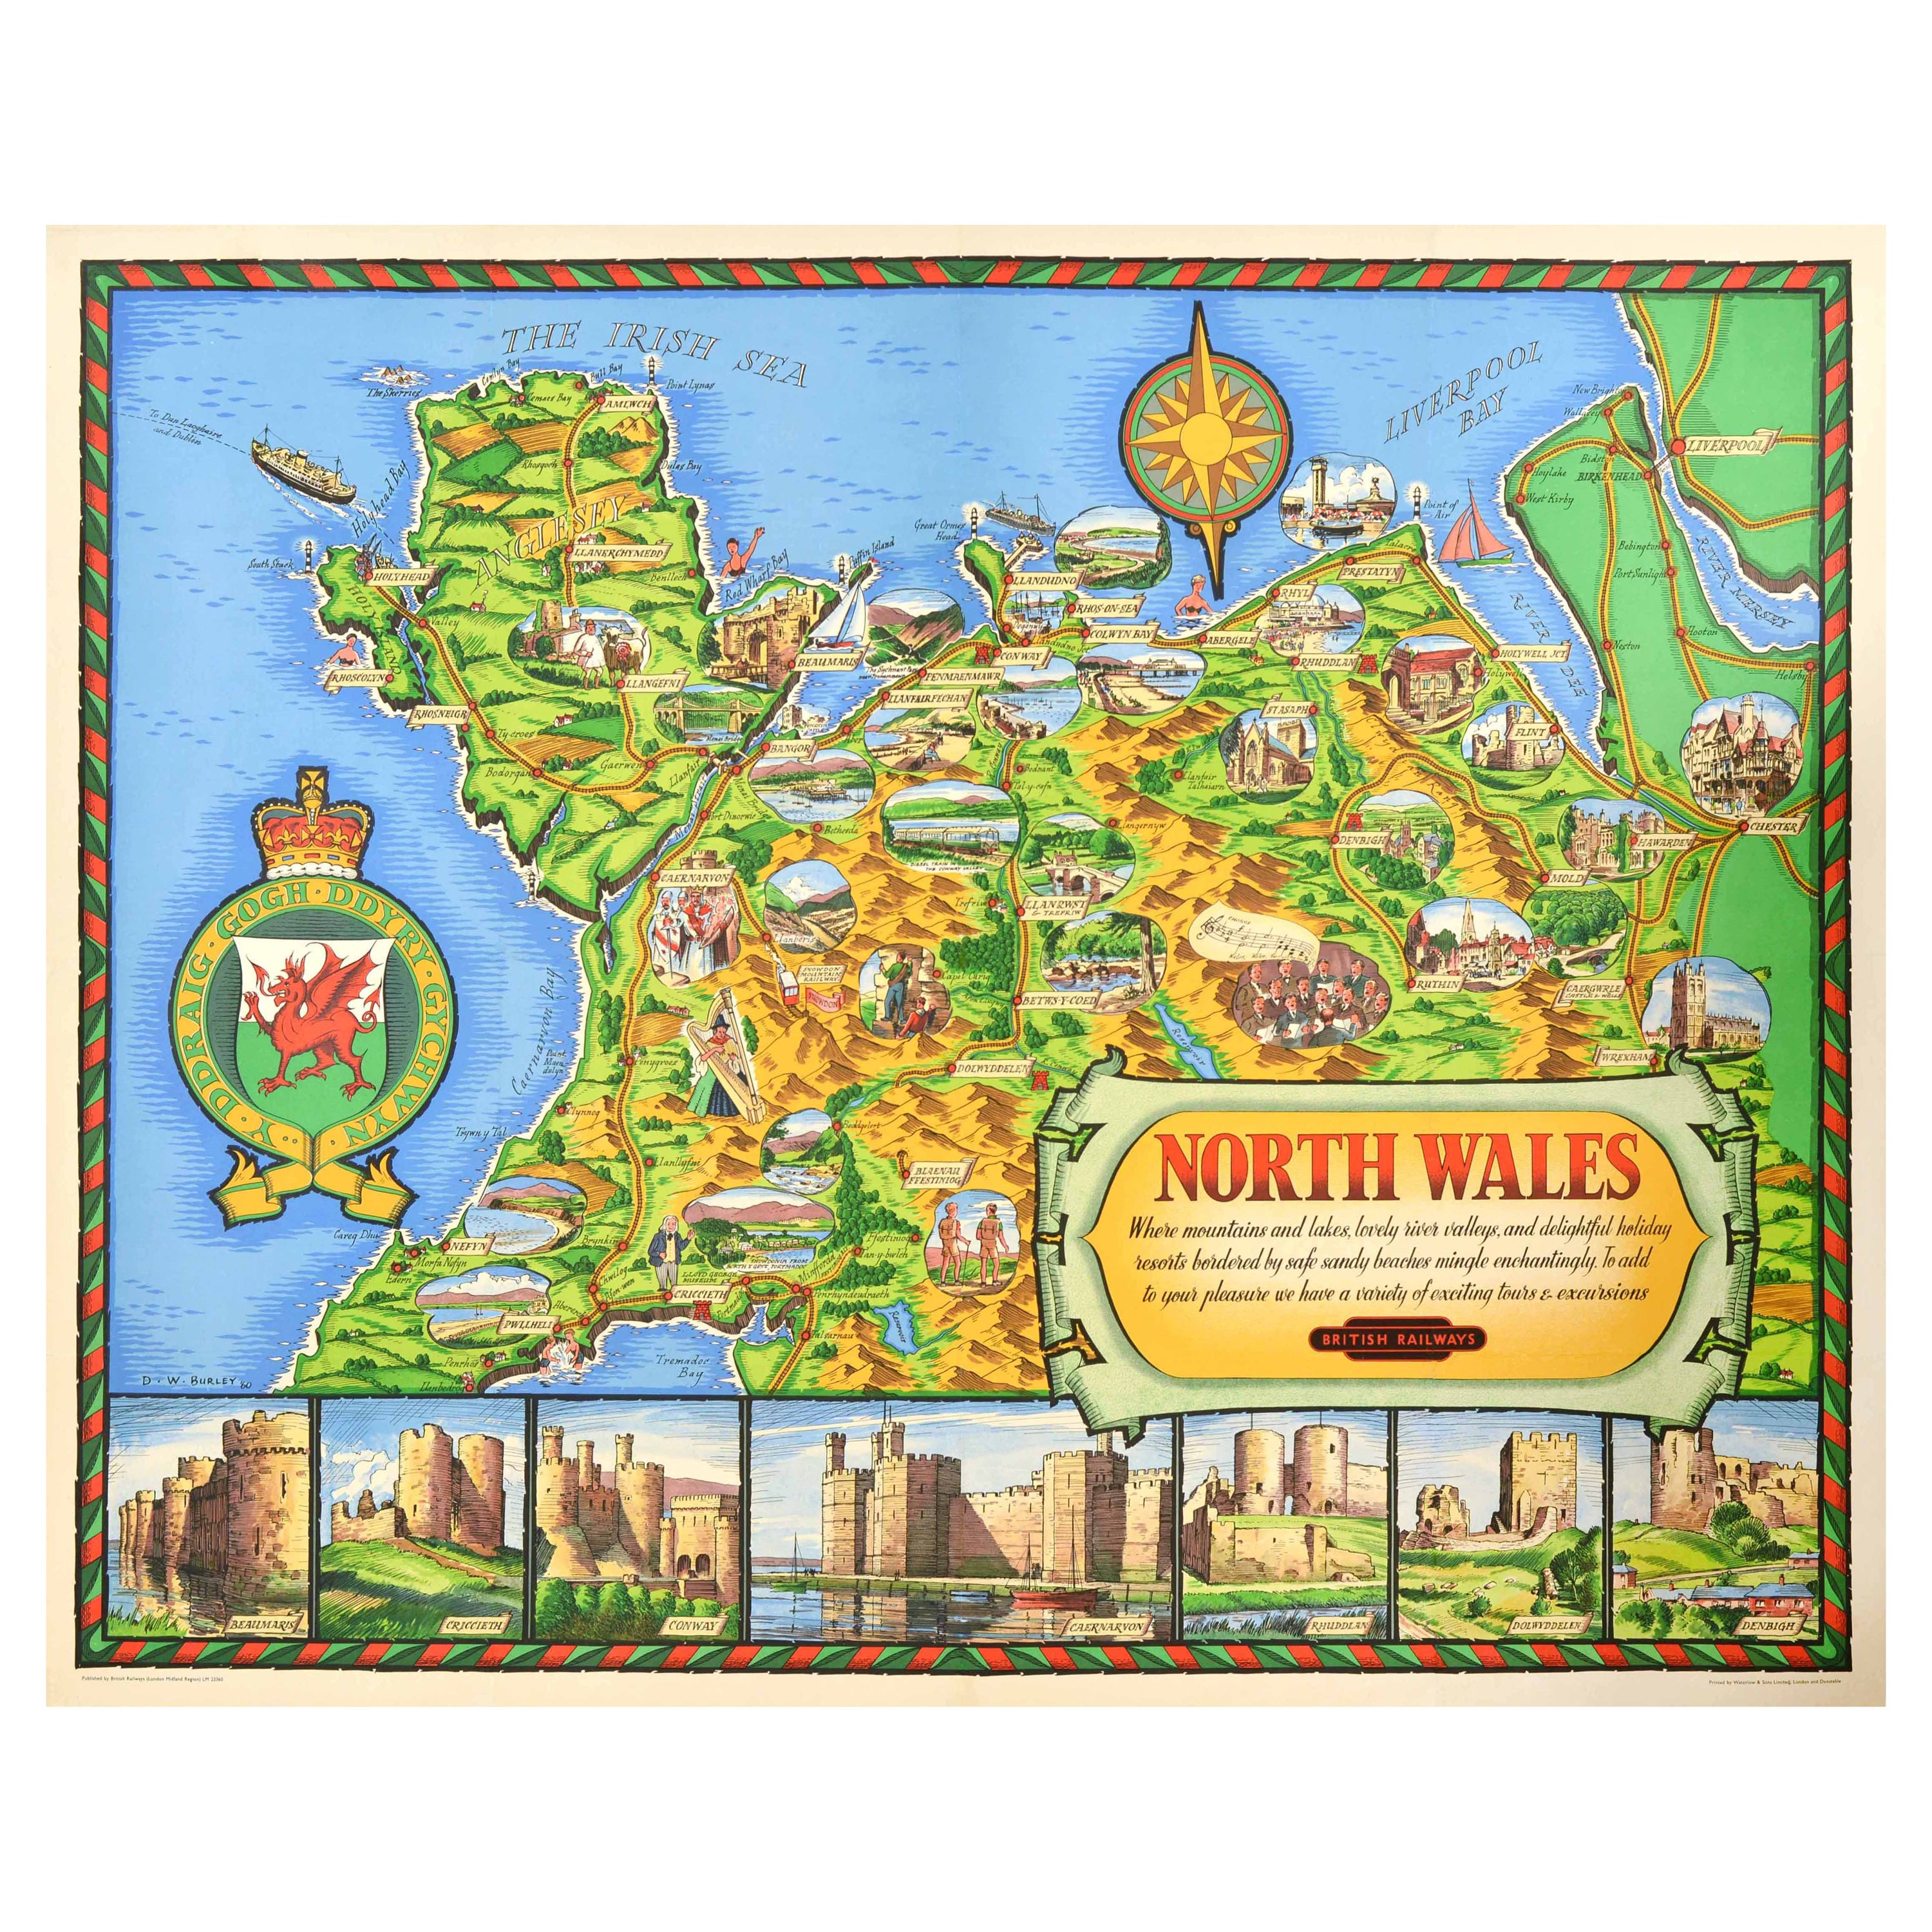 Original Vintage Travel Poster North Wales Map British Railways DW Burley